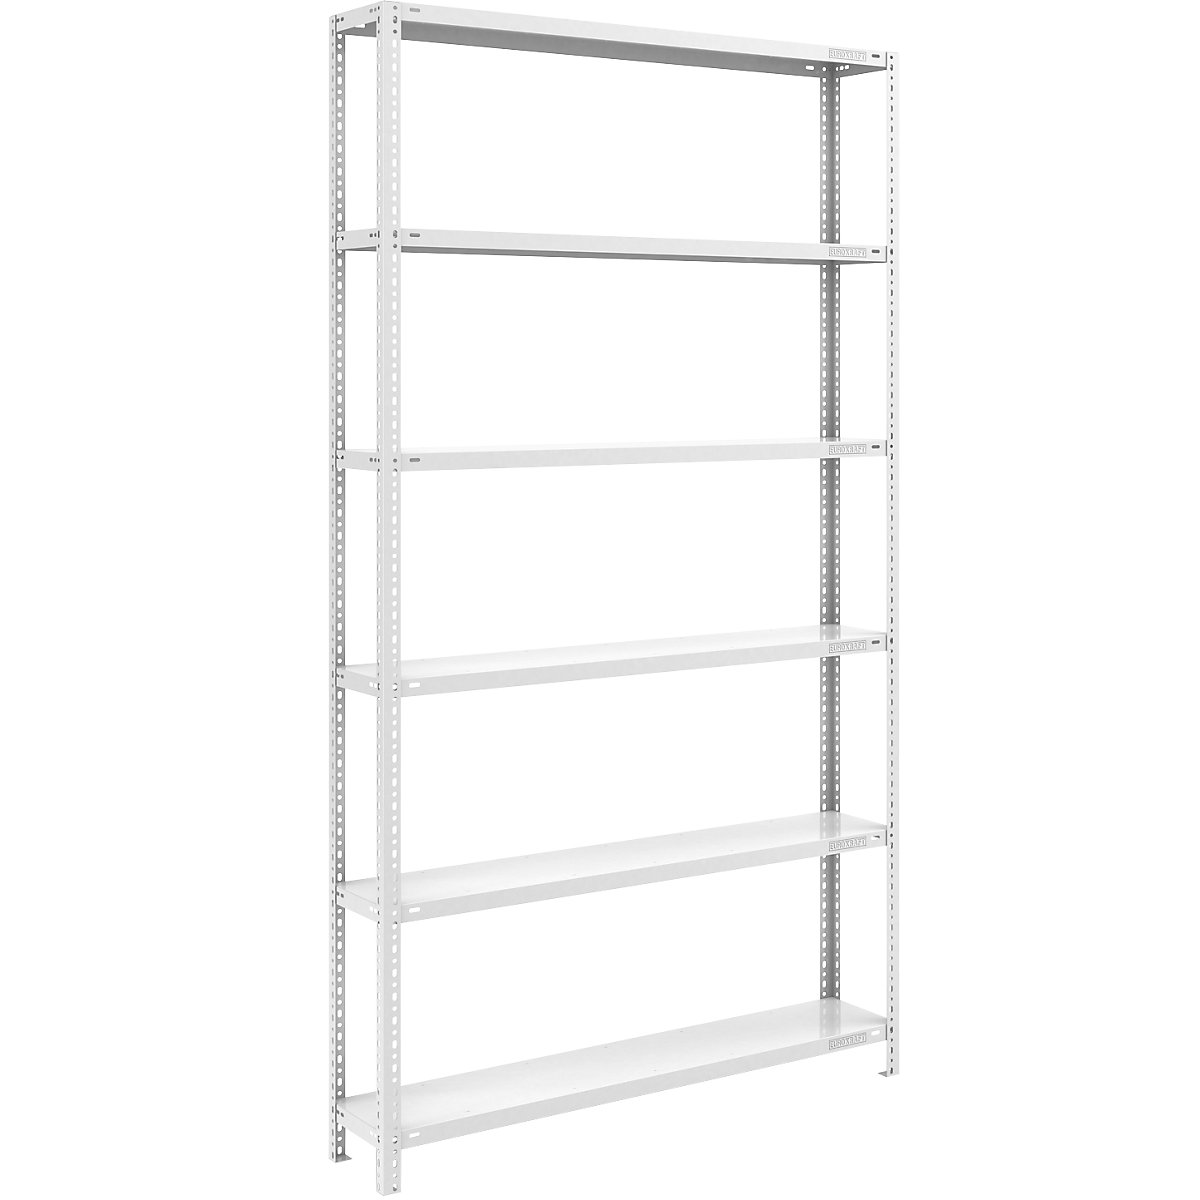 Bolt-together shelf unit, light duty, plastic coated – eurokraft pro, shelf unit height 2500 mm, shelf width 1300 mm, depth 300 mm, standard shelf unit-12